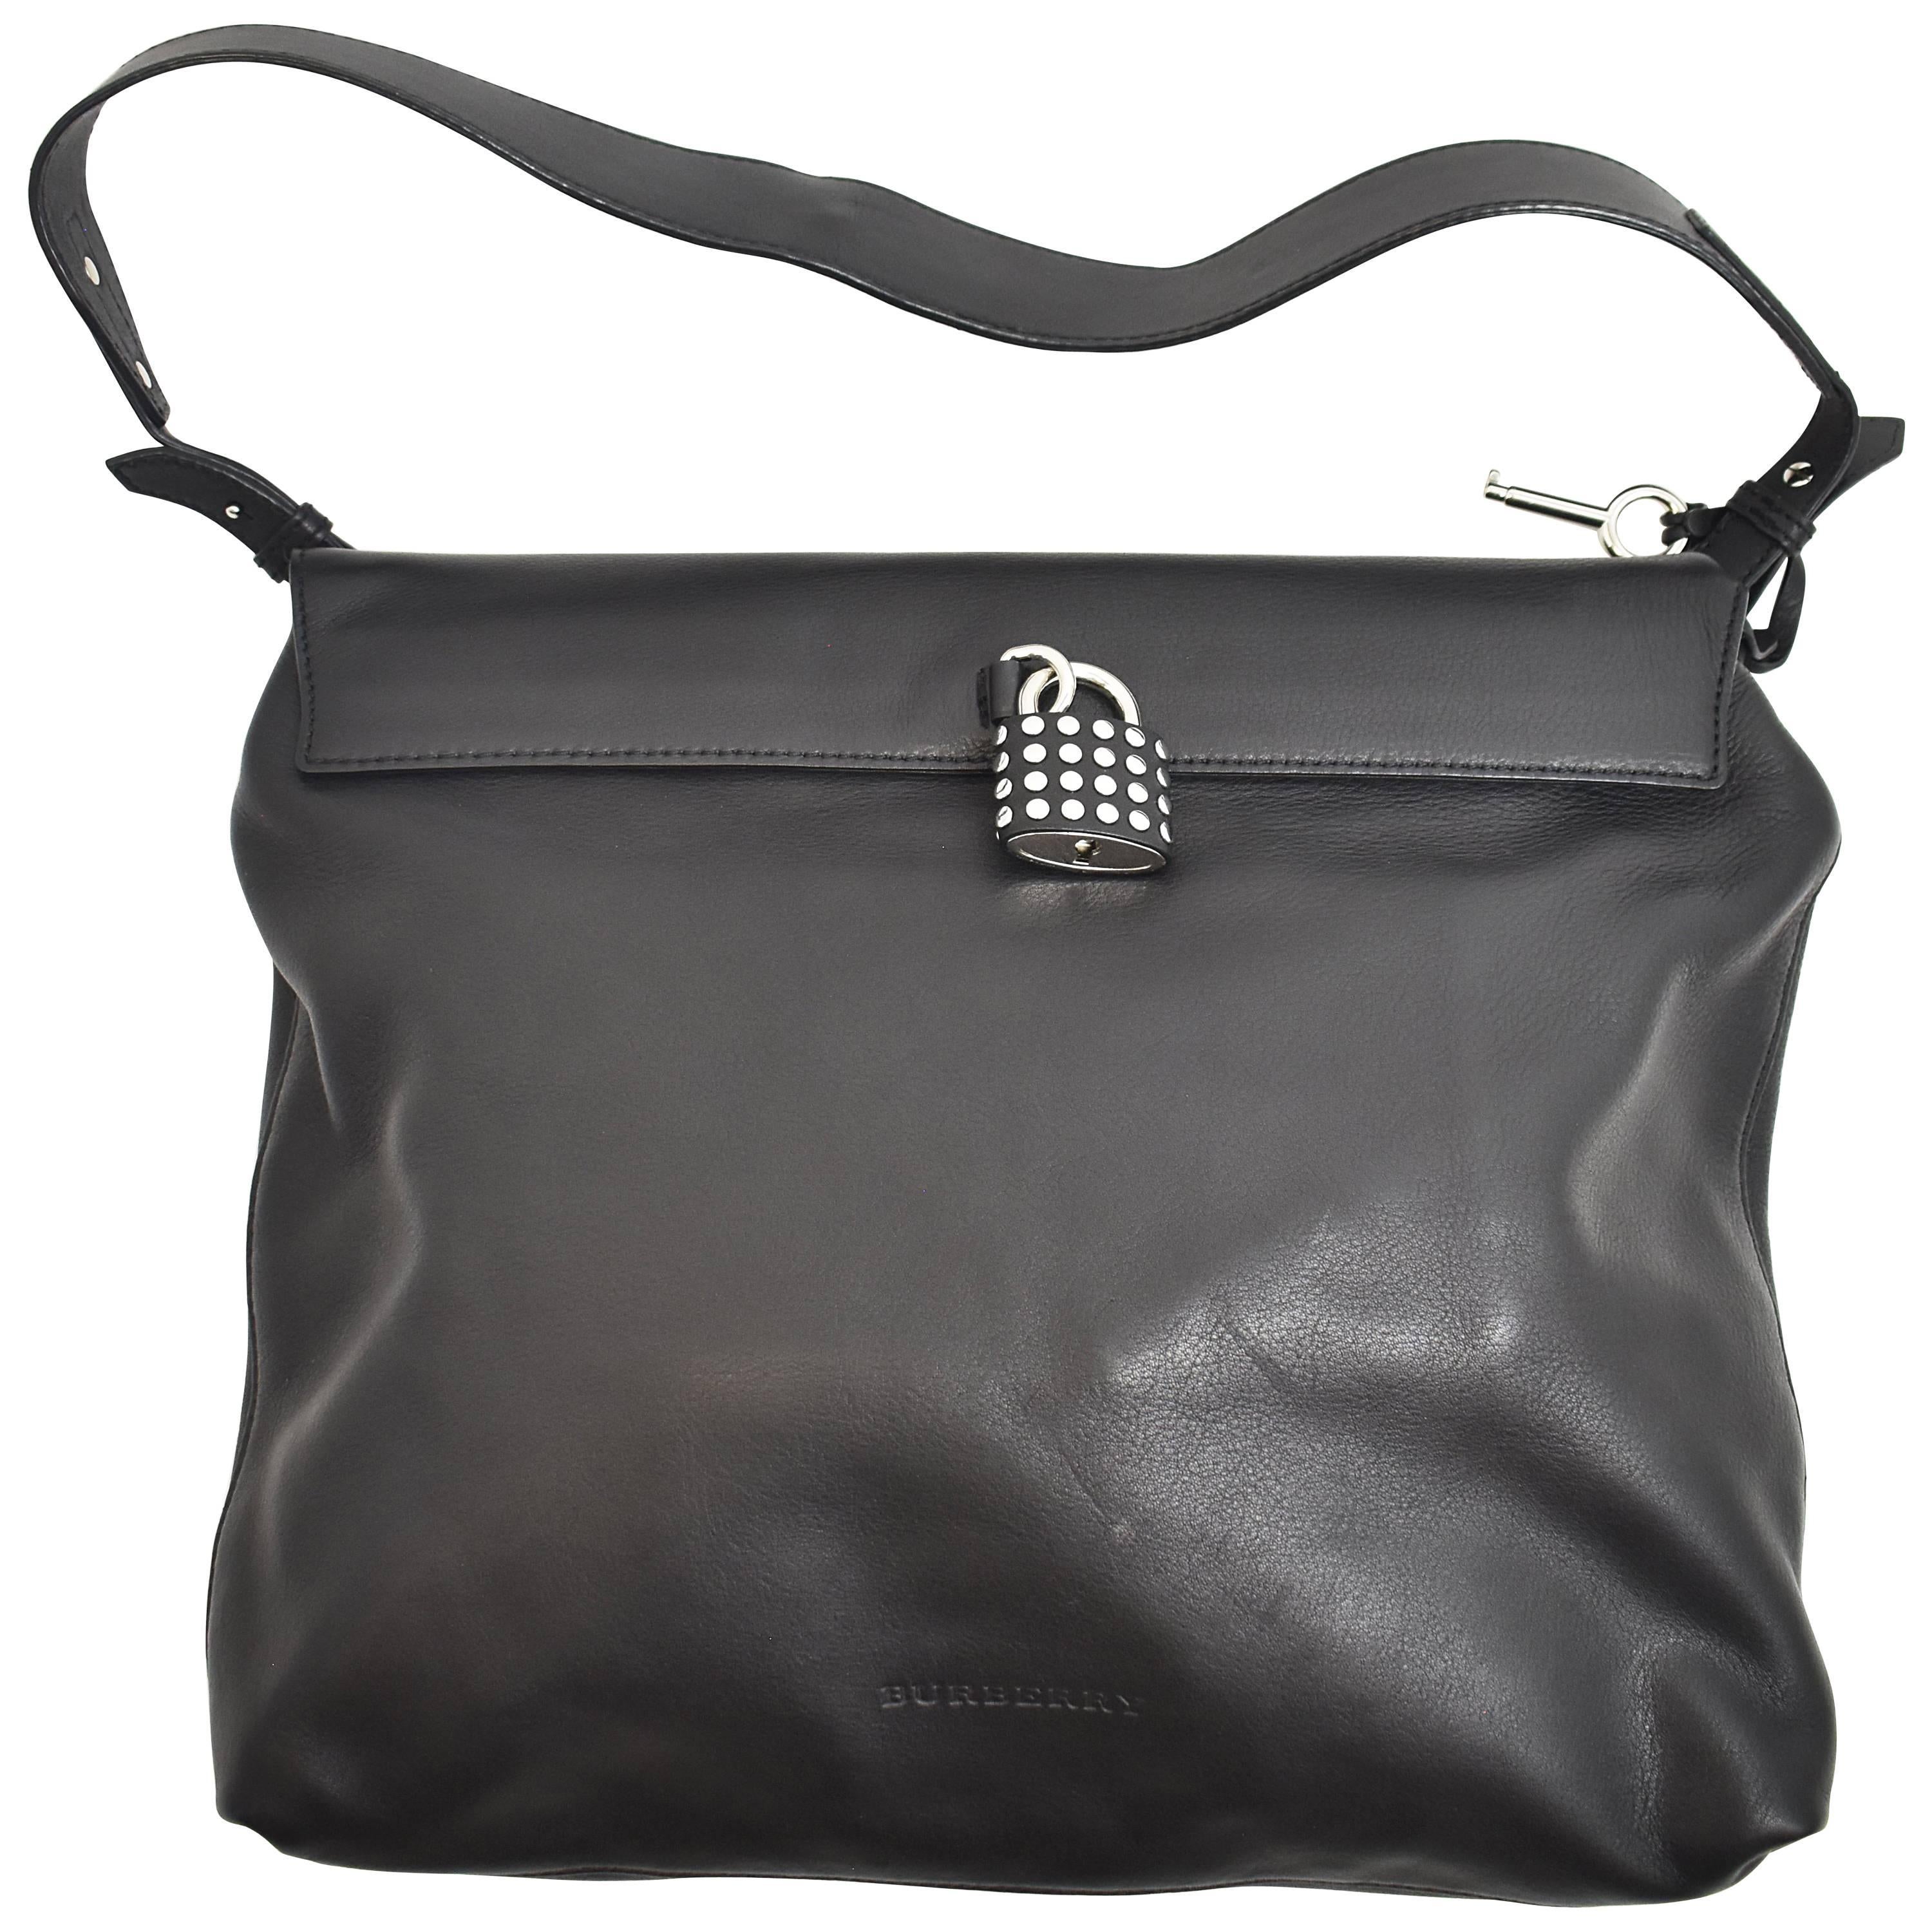 Burberry Black Leather Handbag with Silver Hardware Padlock 